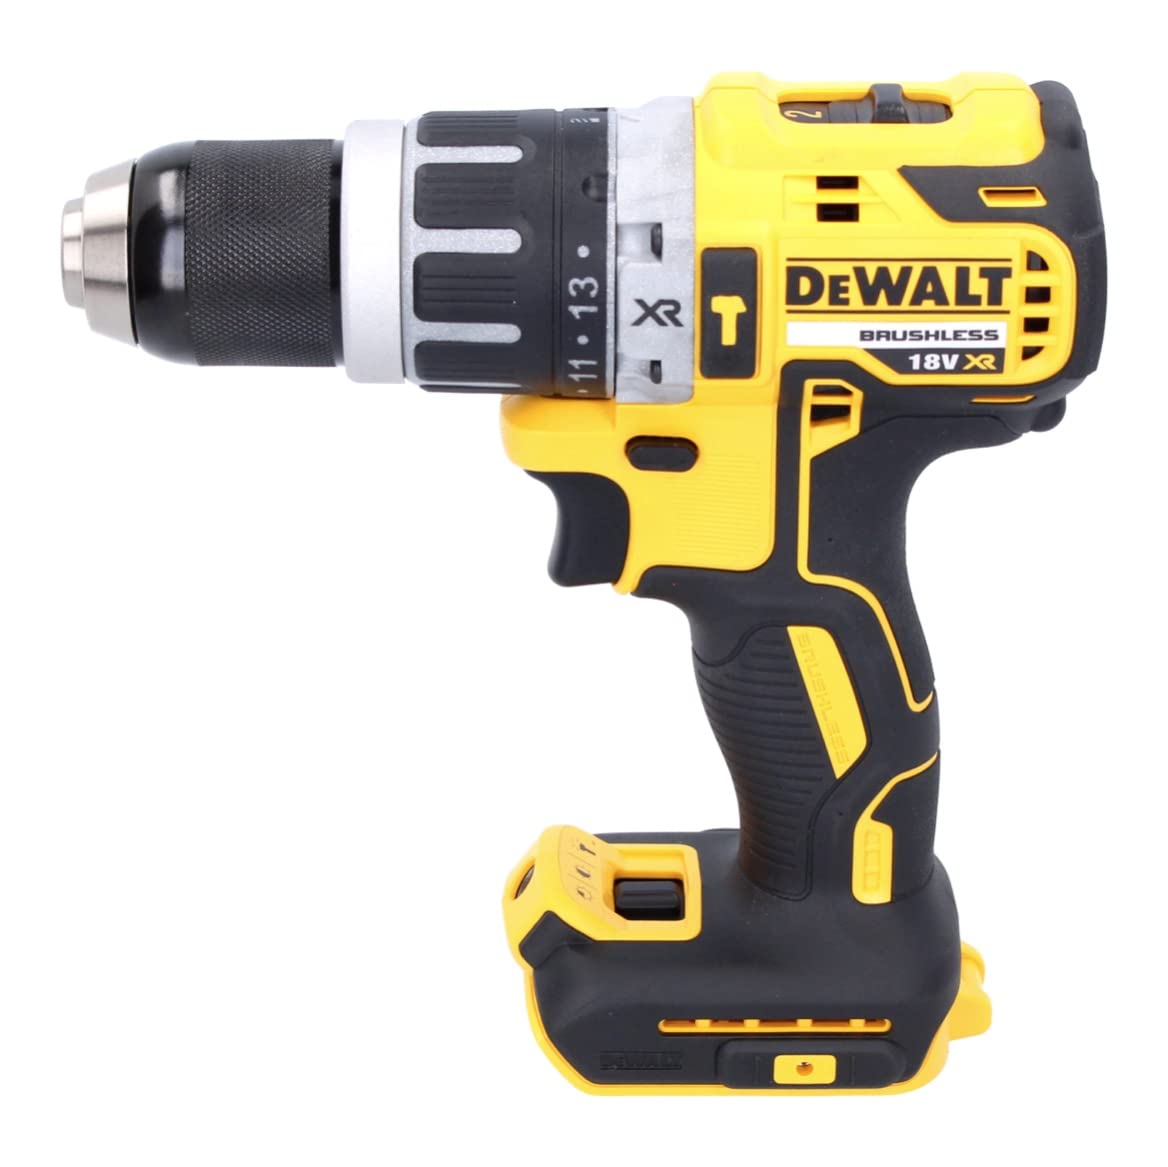 DEWALT DCD796N 18v XR Li-Ion Brushless Compact Combi Hammer, 18 W, 18 V, Yellow/Black